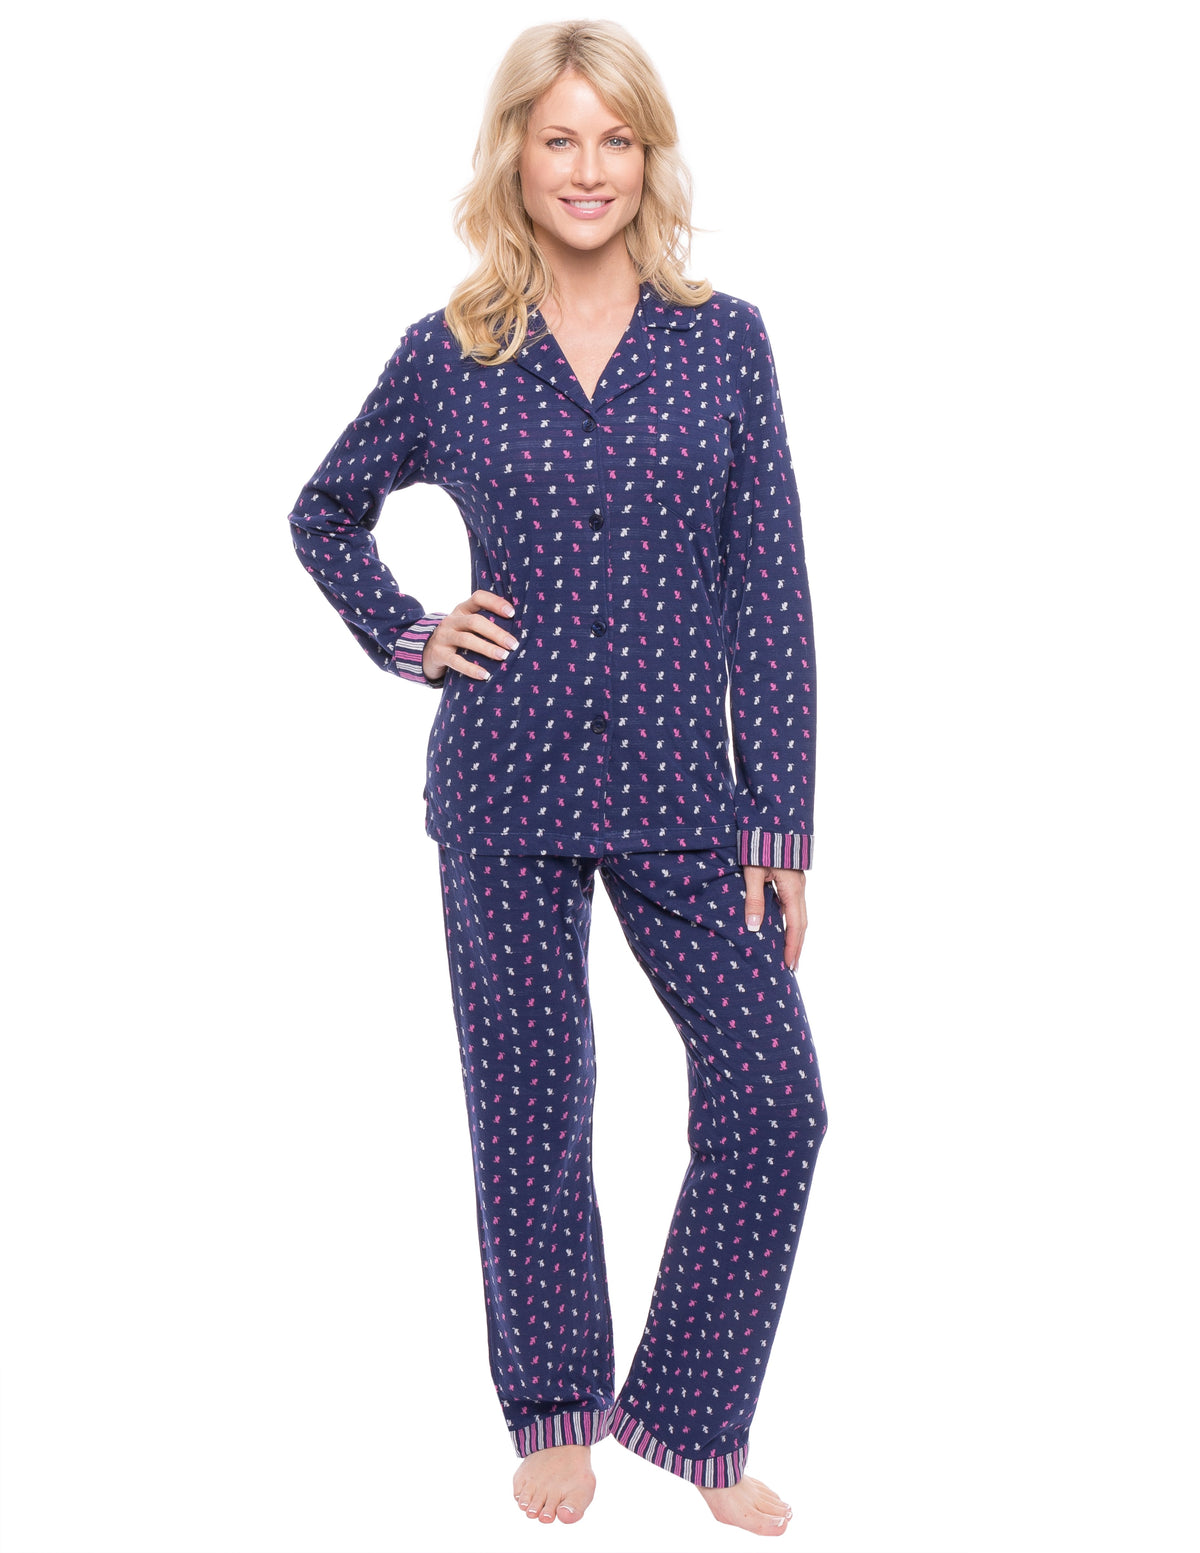 Women's Double Layer Knit Jersey Pajama Sleepwear Set - Leaves Navy/Pink